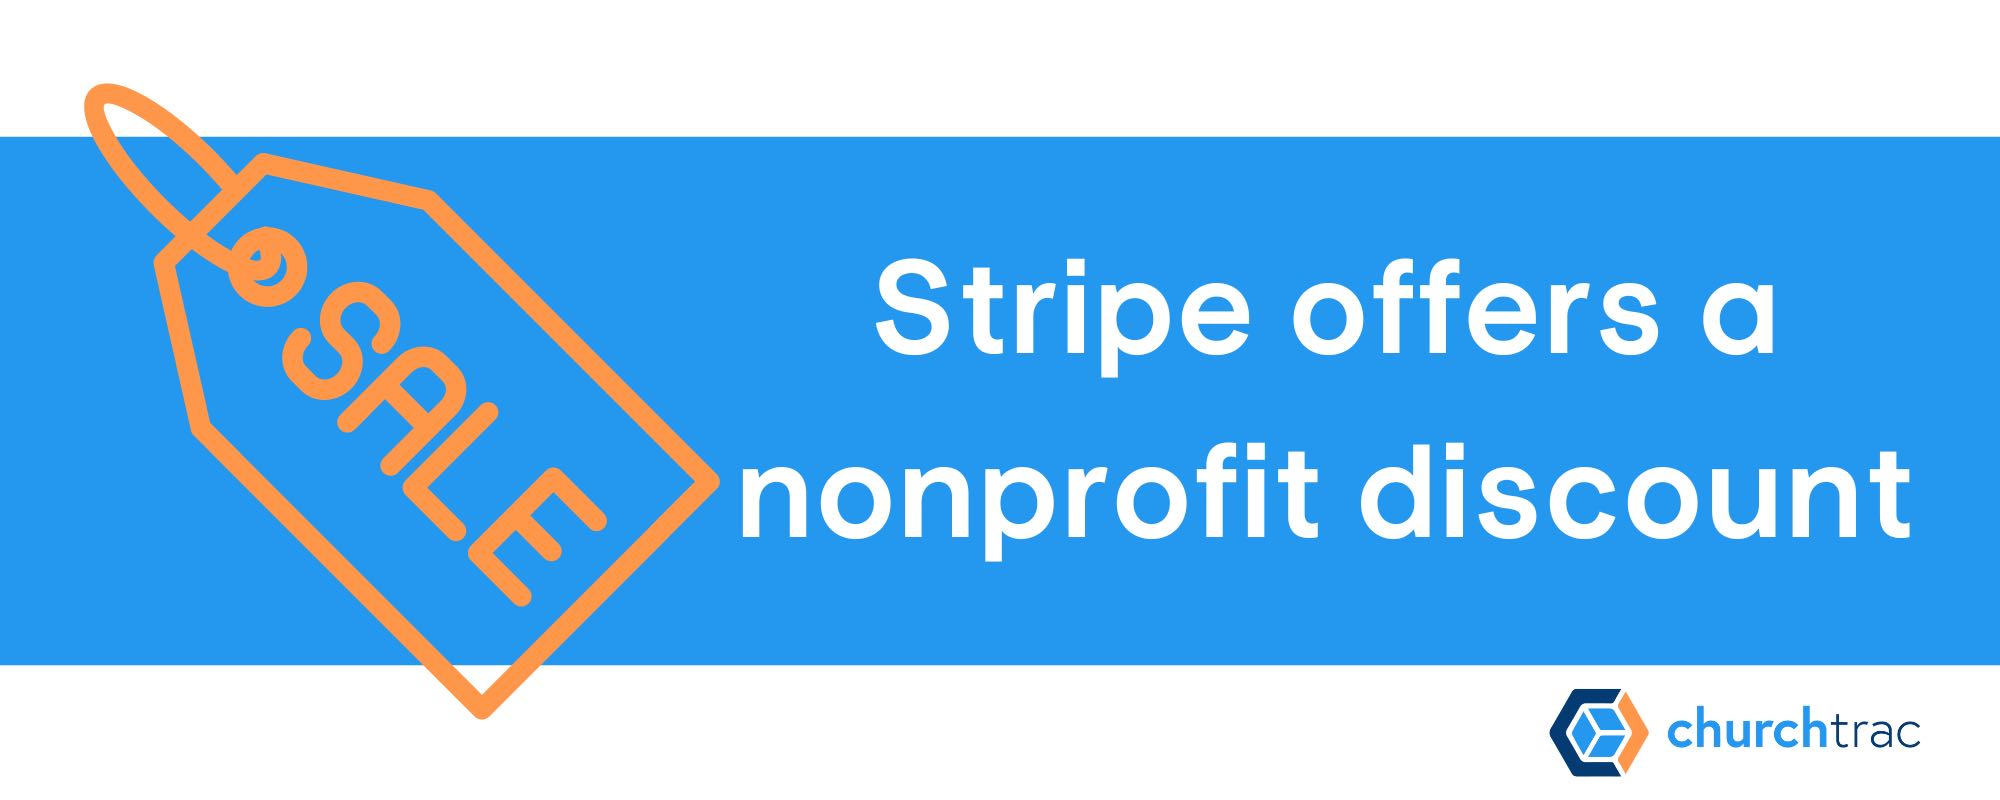 Churches get Stripe Nonprofit Discount